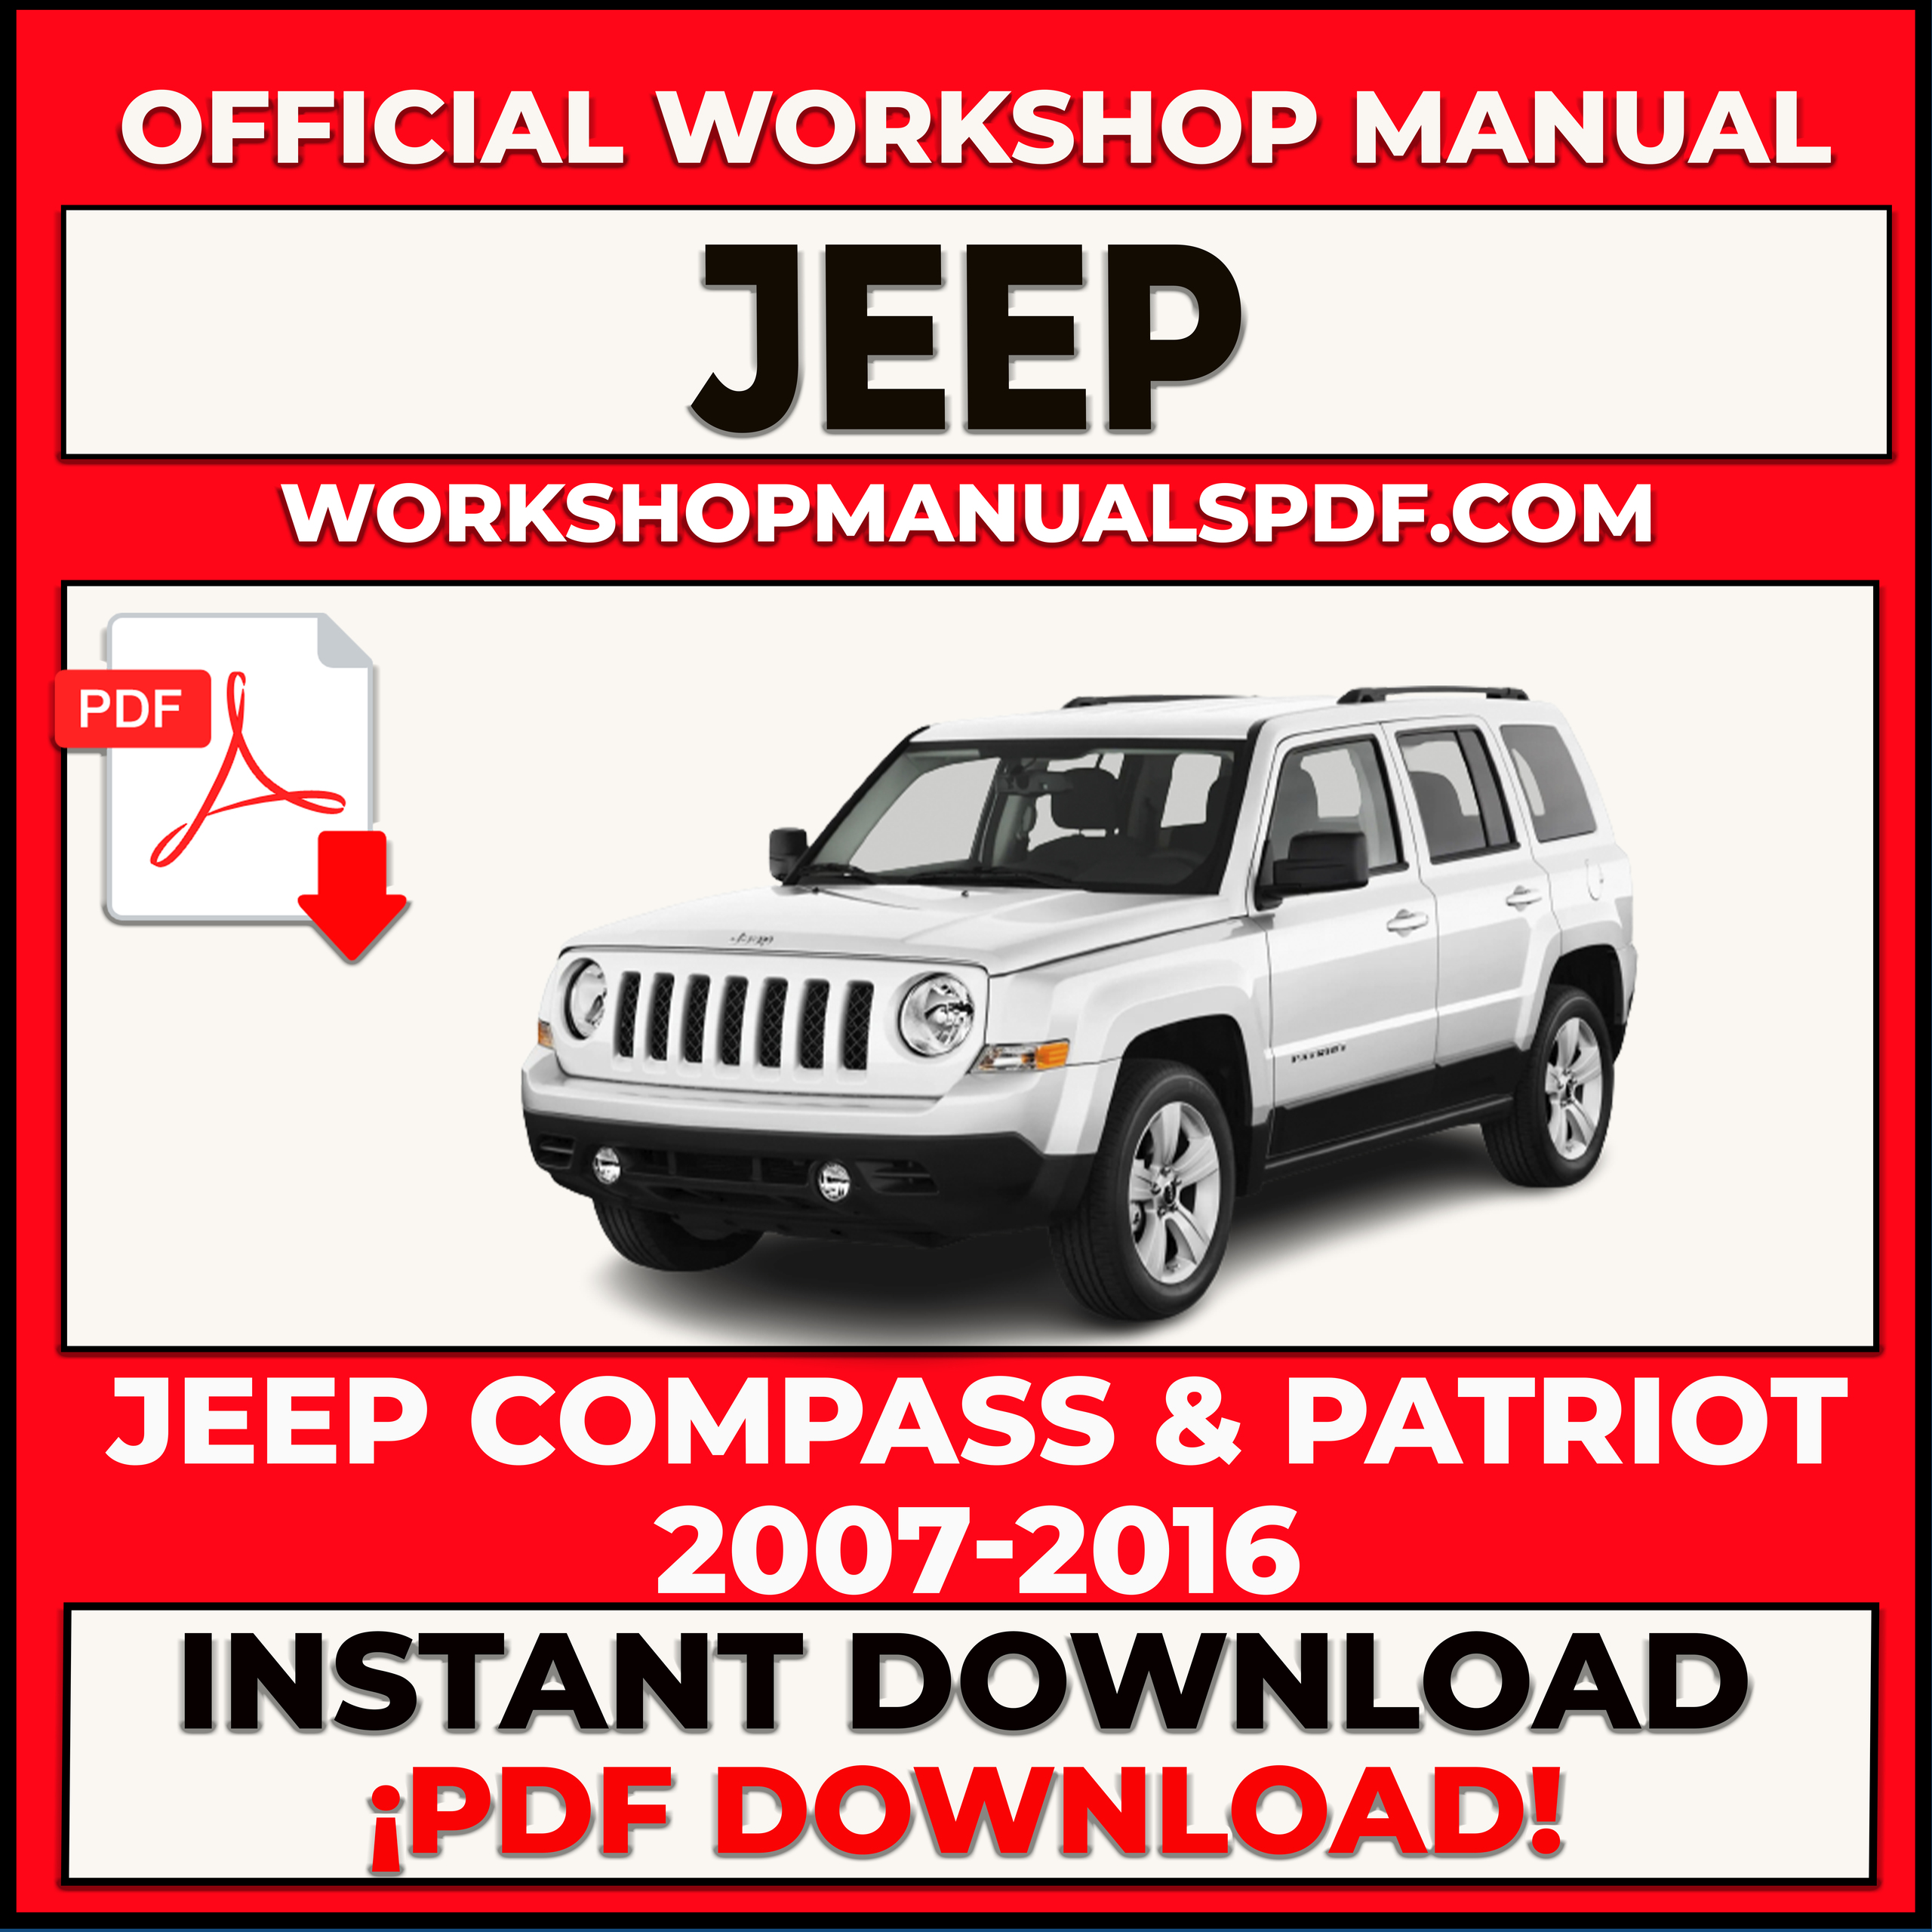 Jeep Compass and Patriot 2007-2016 Workshop Repair Manual